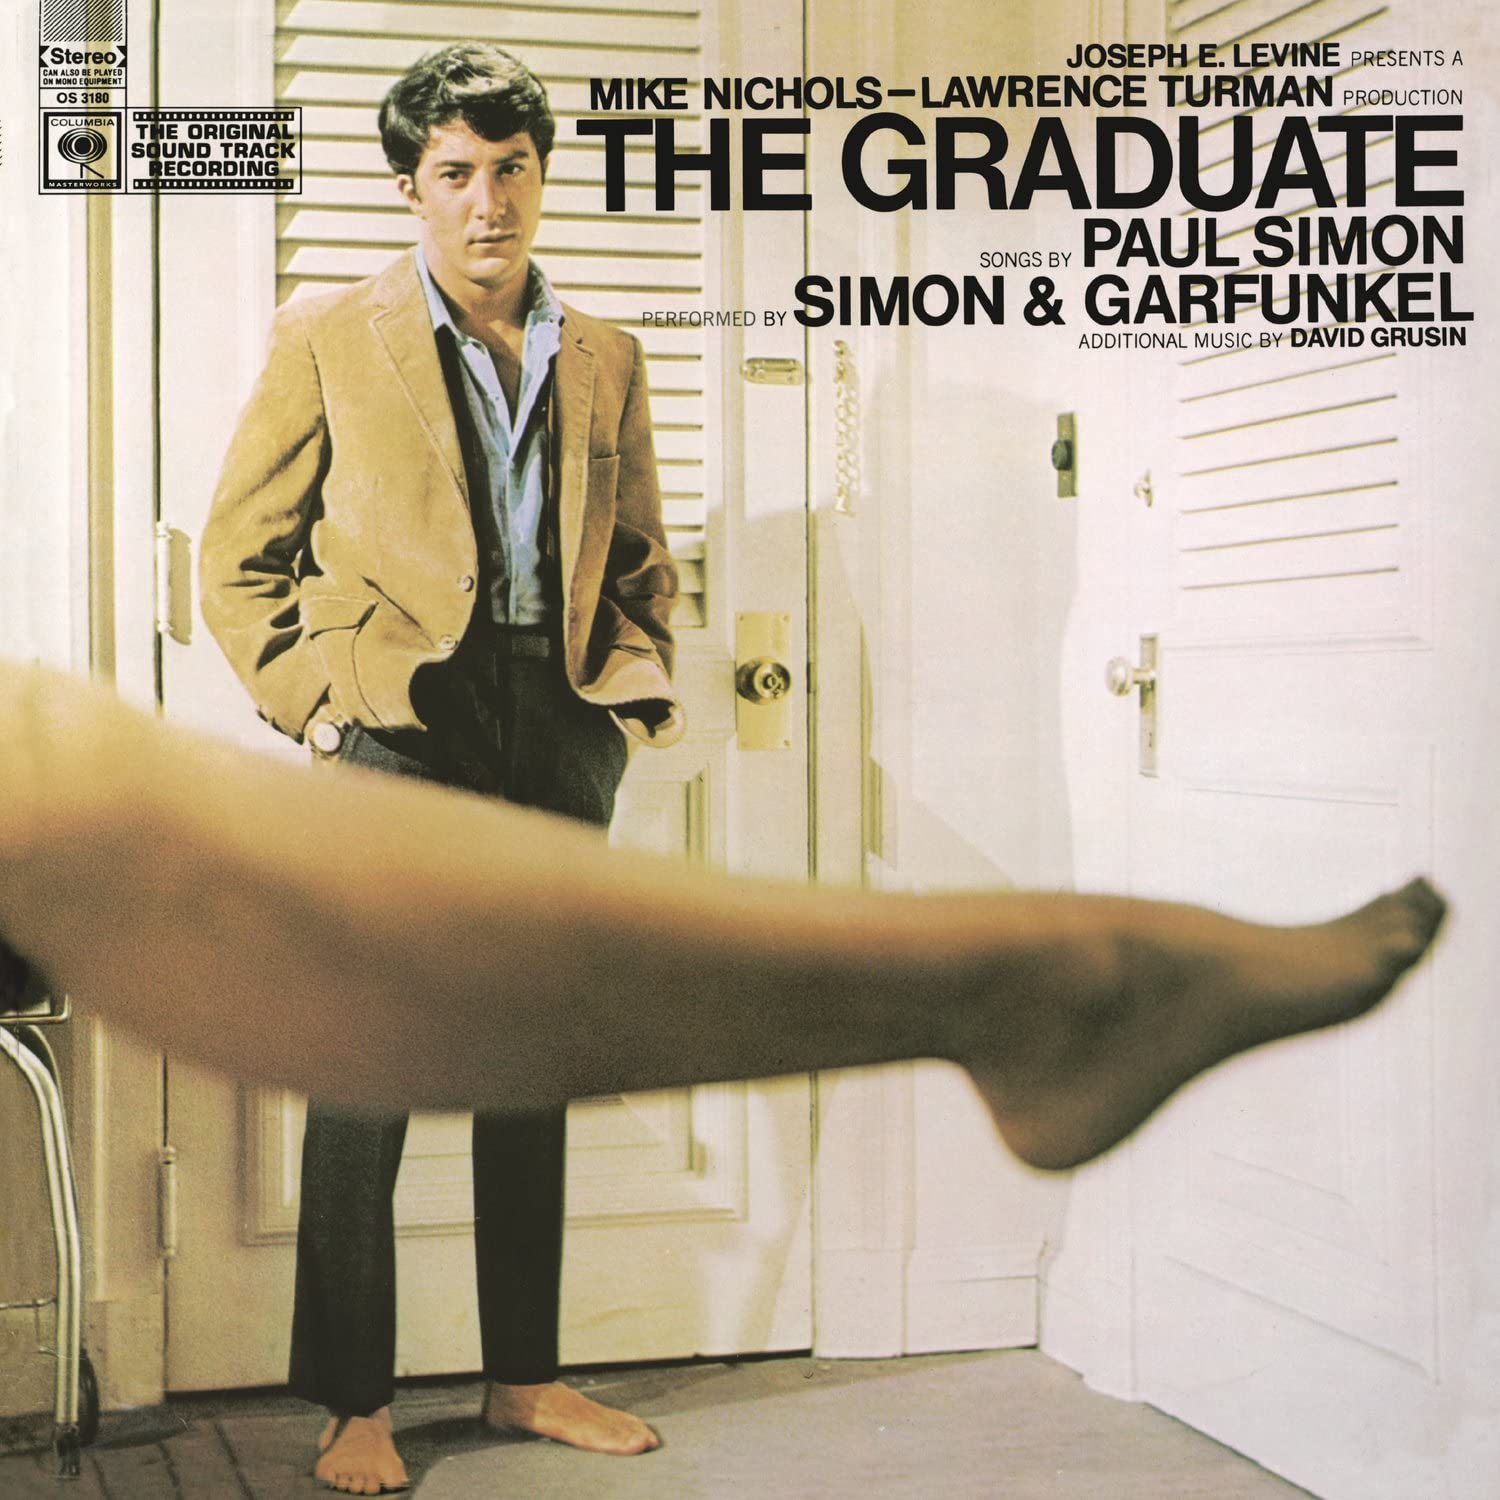 Simon & Garfunkel - The Graduate Soundtrack (Vinyl LP)